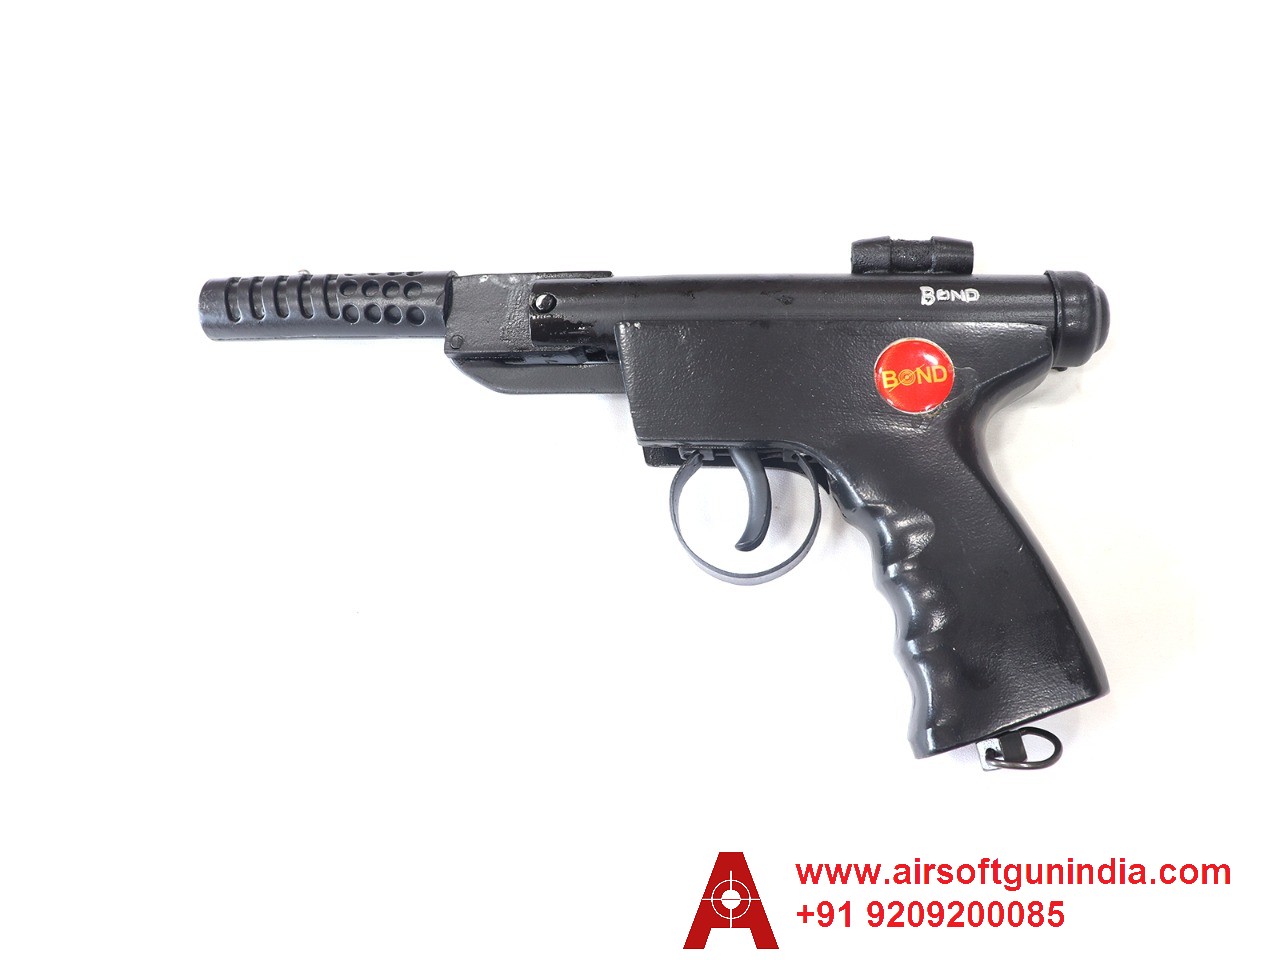 Bond Target Metal Single-Shot .177 Caliber / 4.5 Mm Indian Air Pistol By Airsoft Gun India